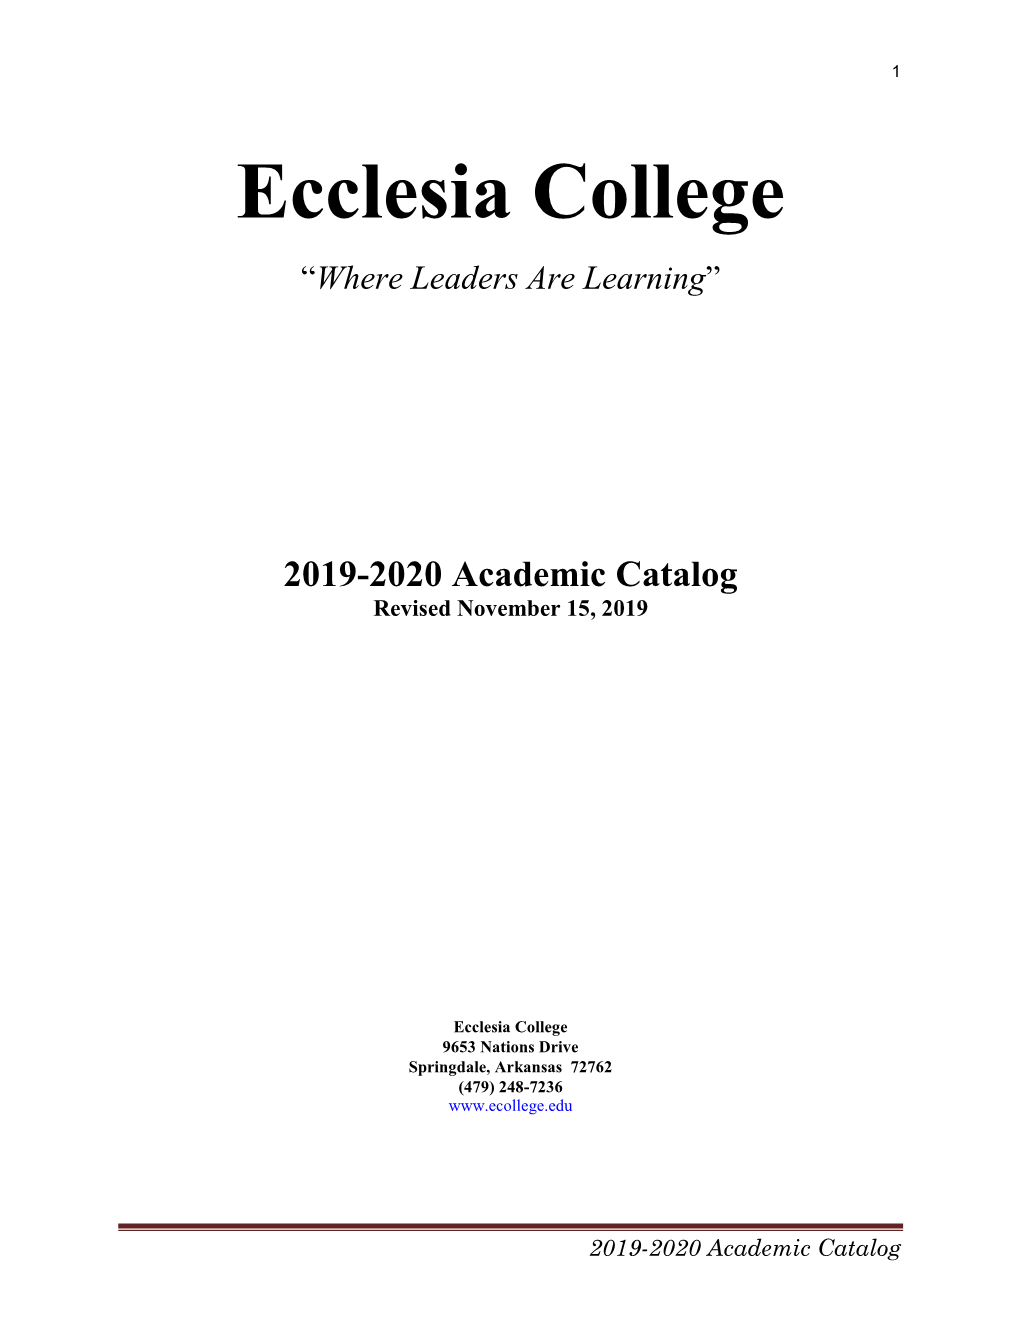 2019-2020 Academic Catalog Revised November 15, 2019